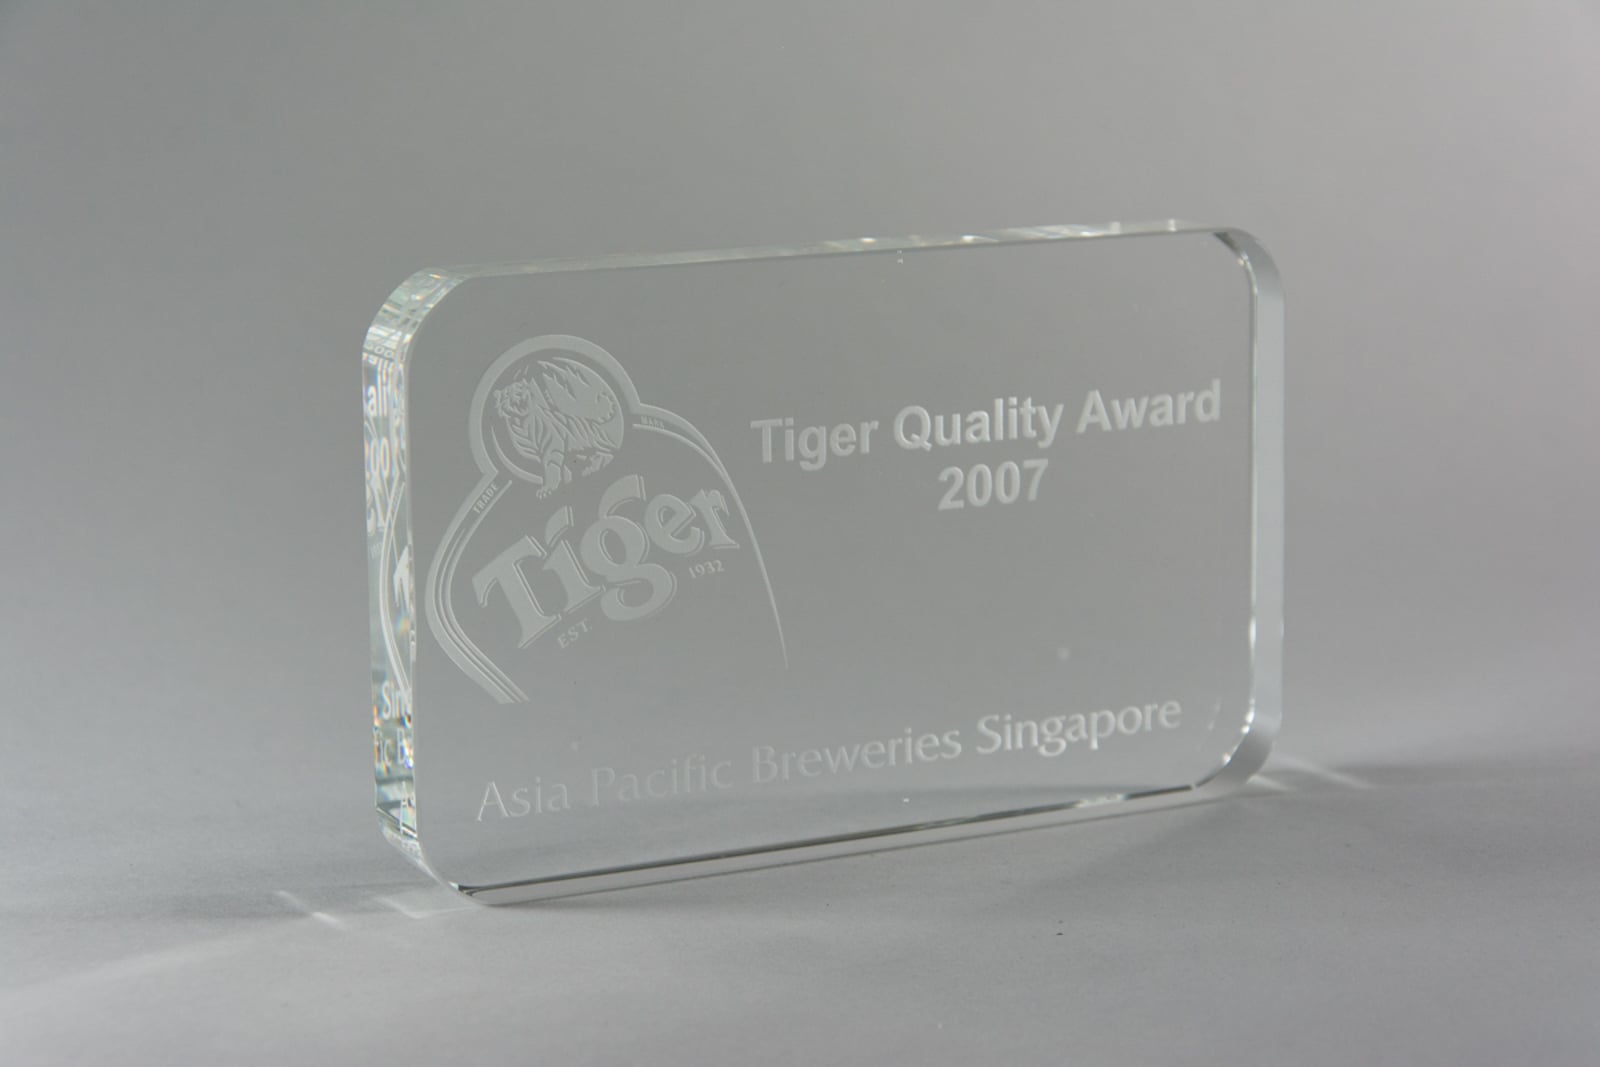 Tiger Quality Award Trophy 2007